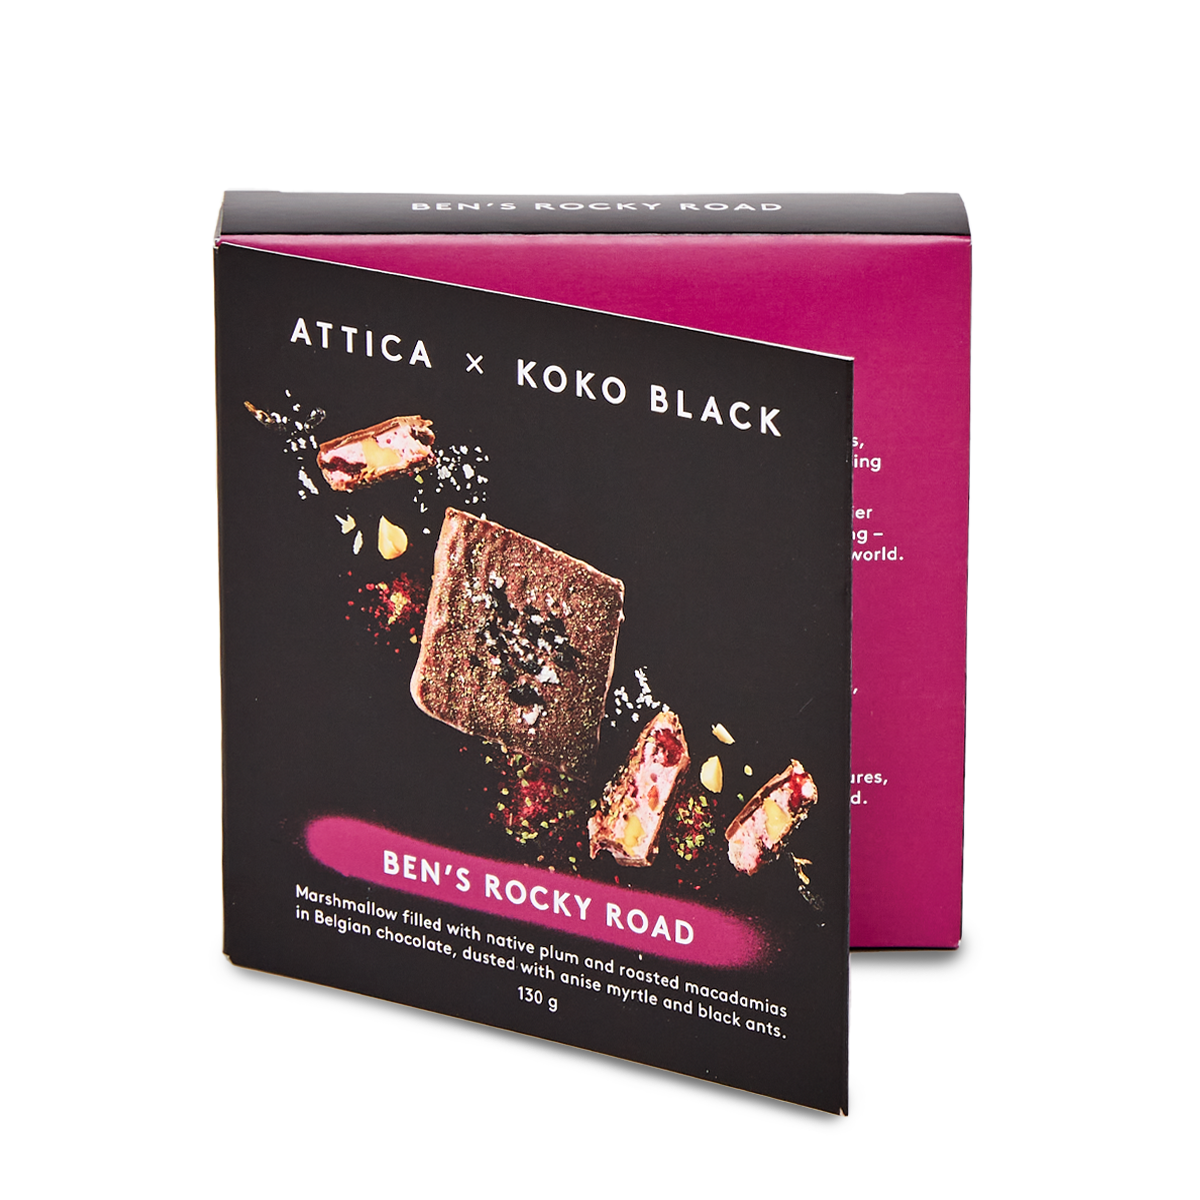 Attica x Koko Black | Ben's Rocky Road